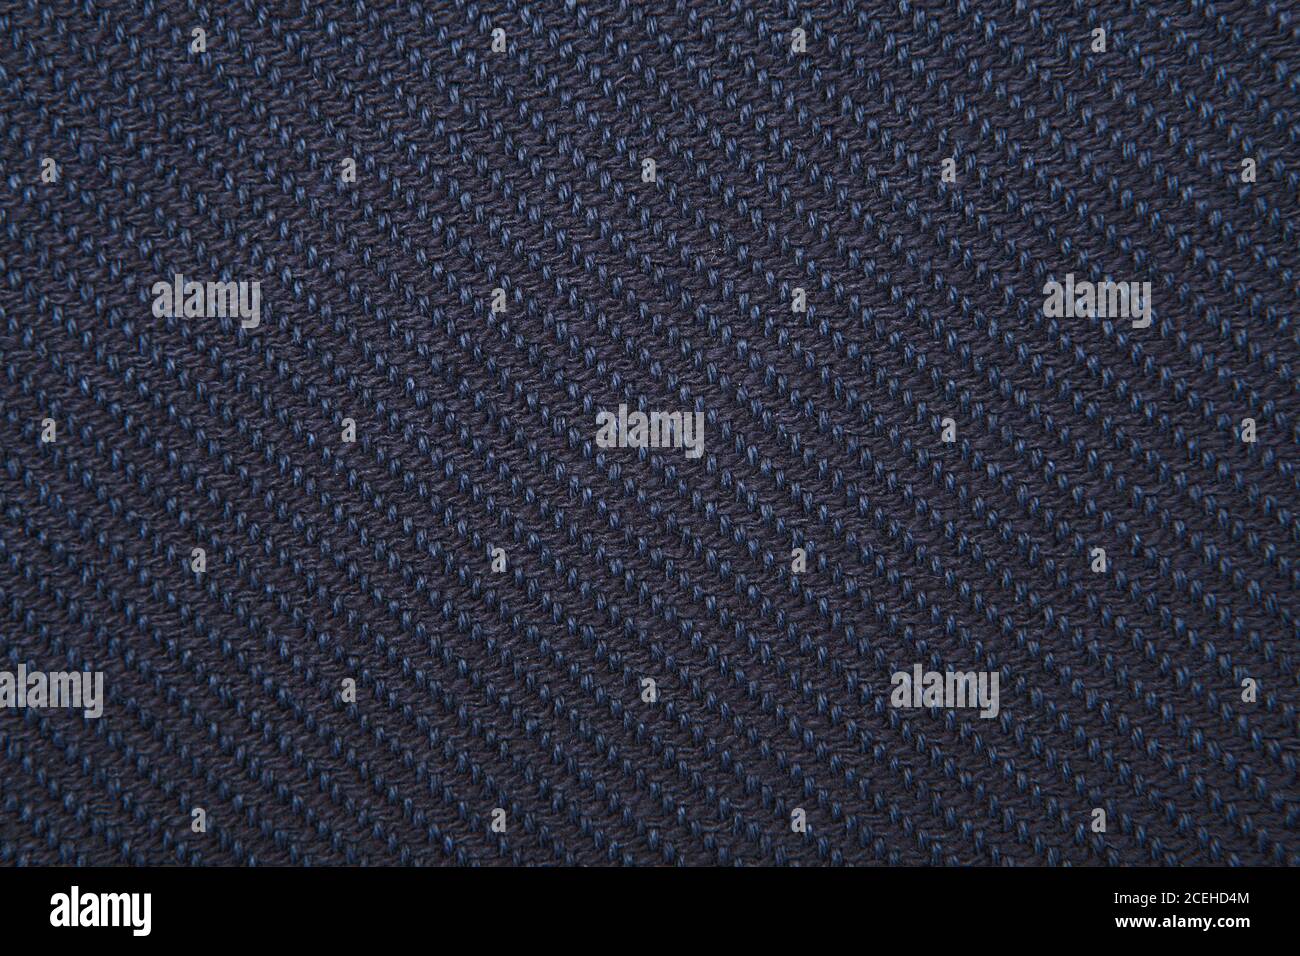 navy twill weave fabric pattern texture background closeup Stock Photo